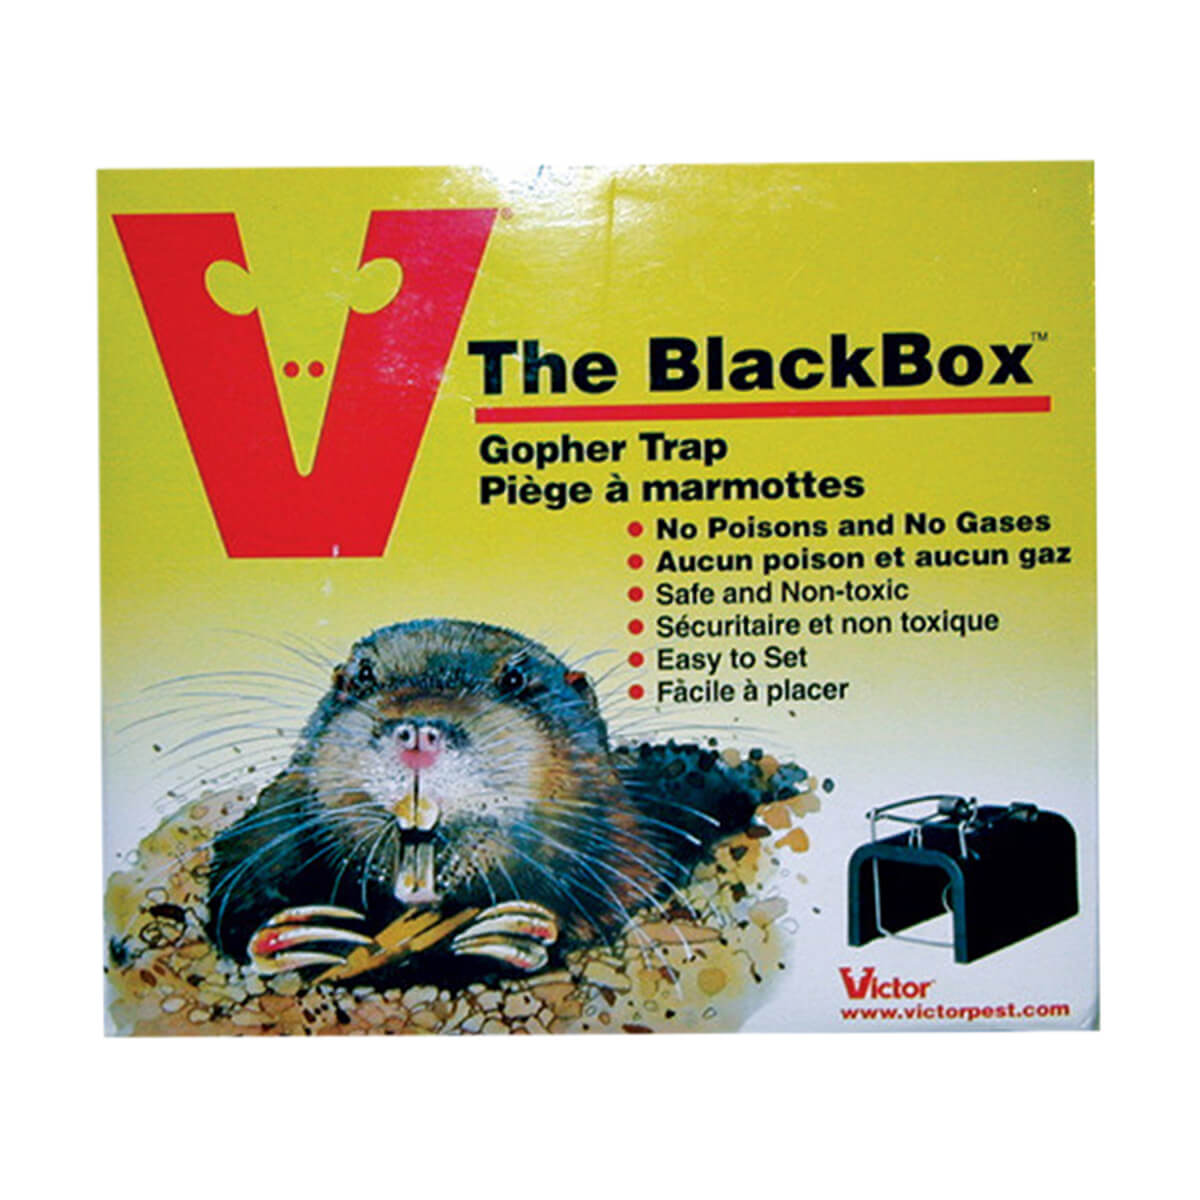 The Black Box Gopher Trap